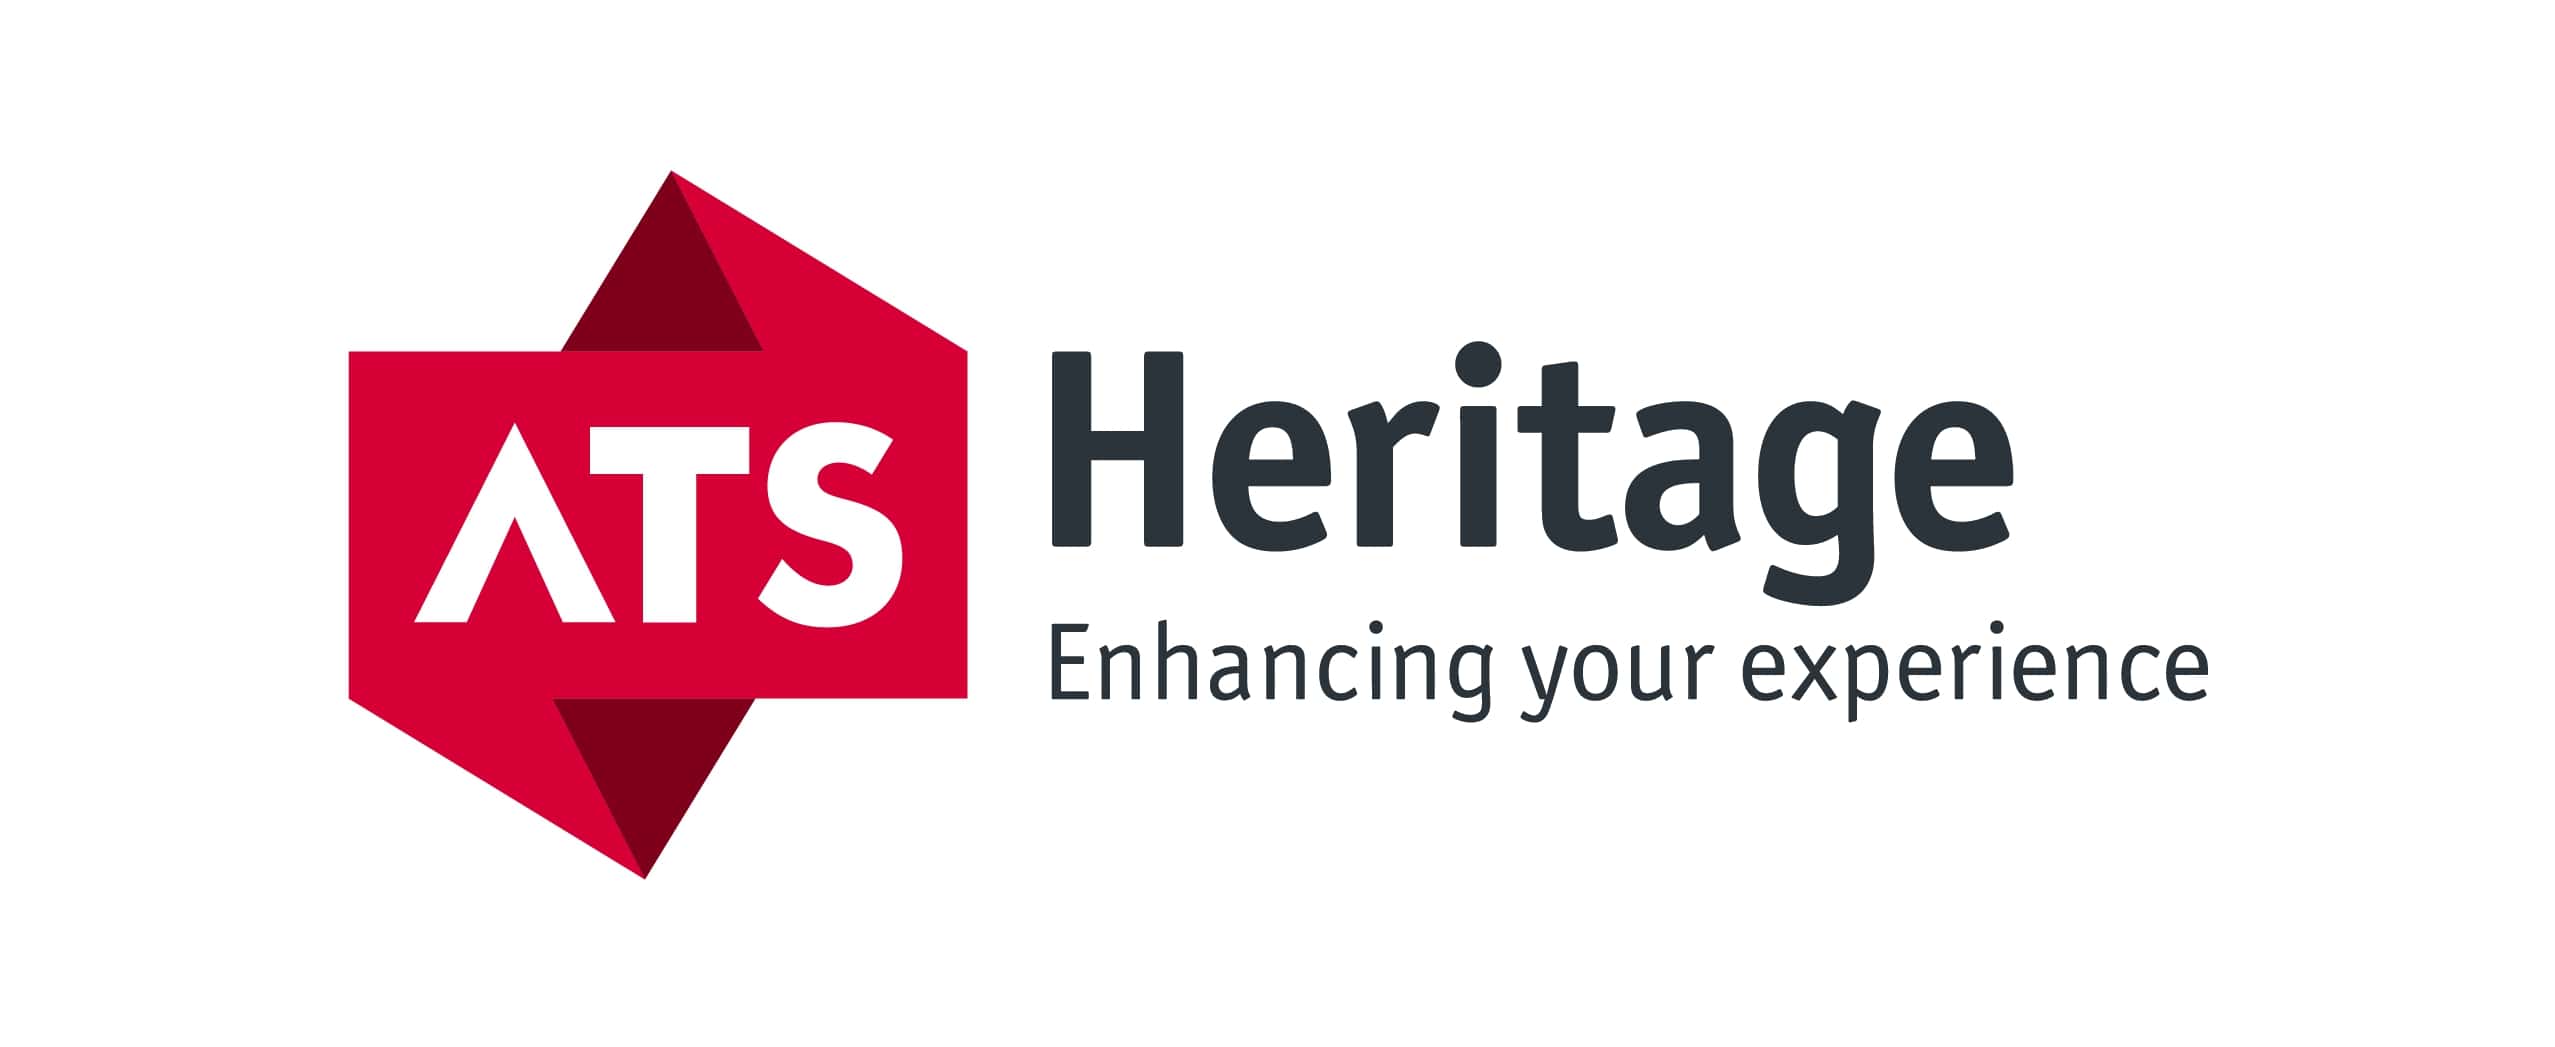 Image showing ATS Heritage